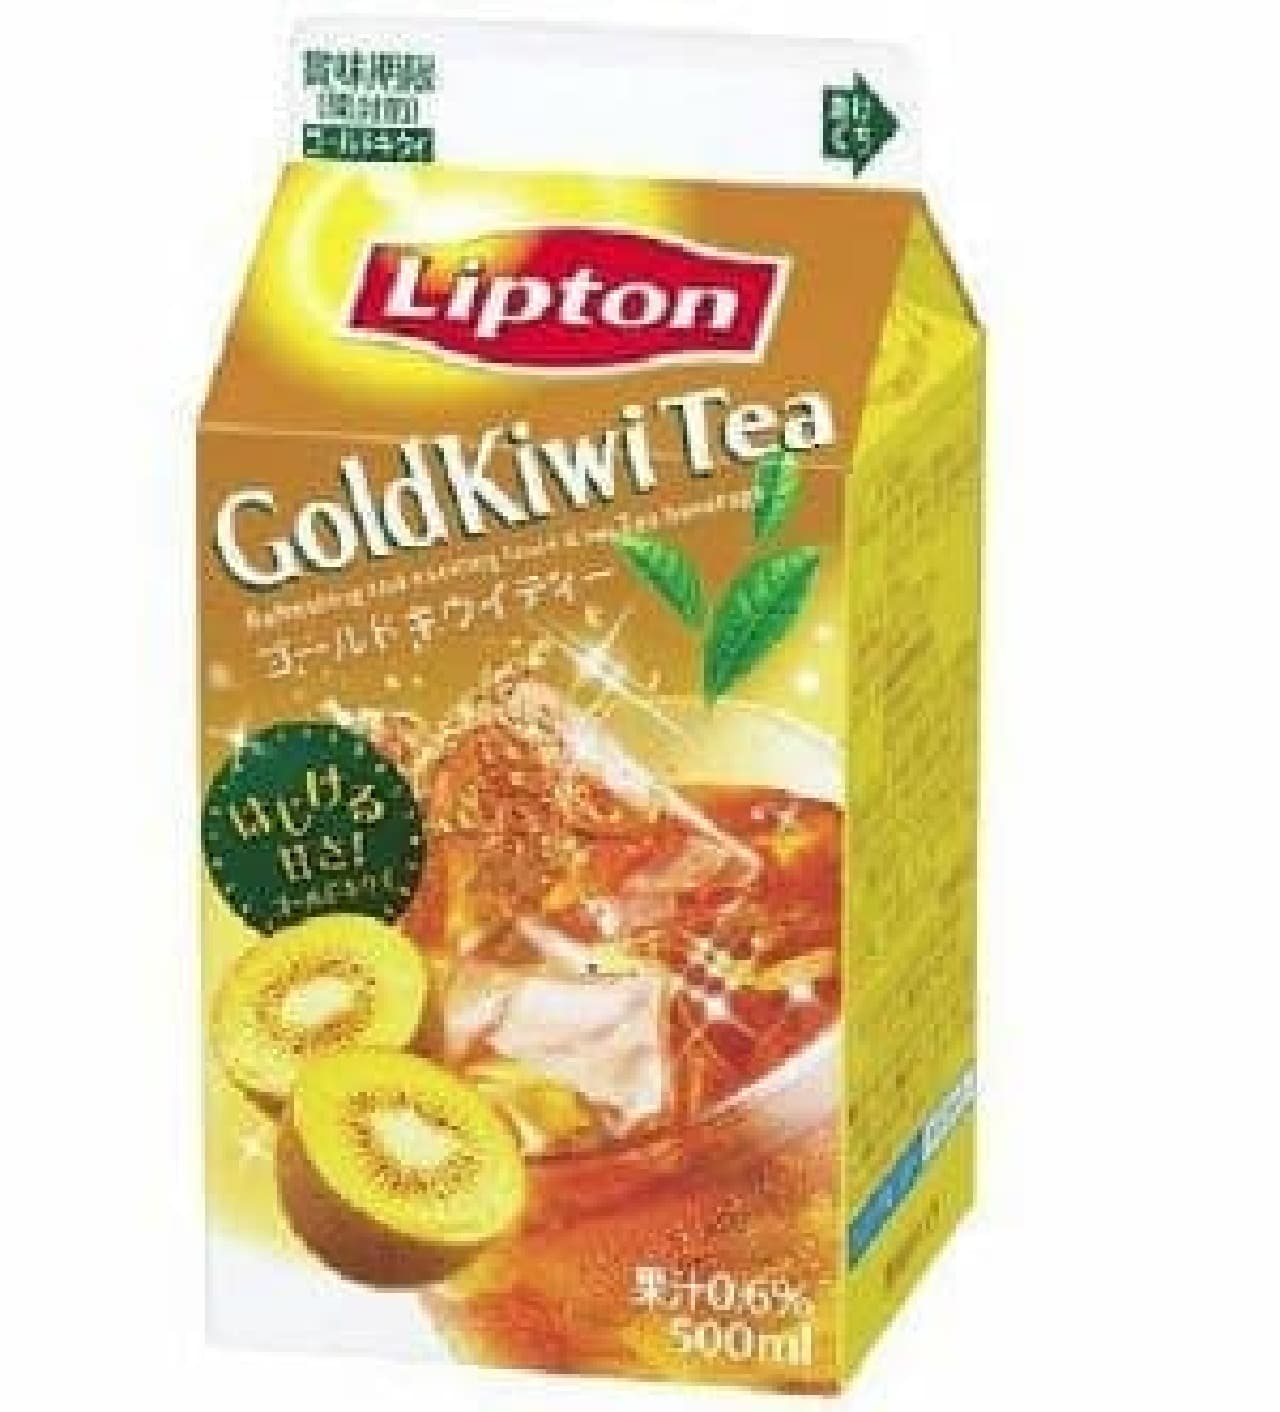 Popping sweetness! Gold kiwi tea